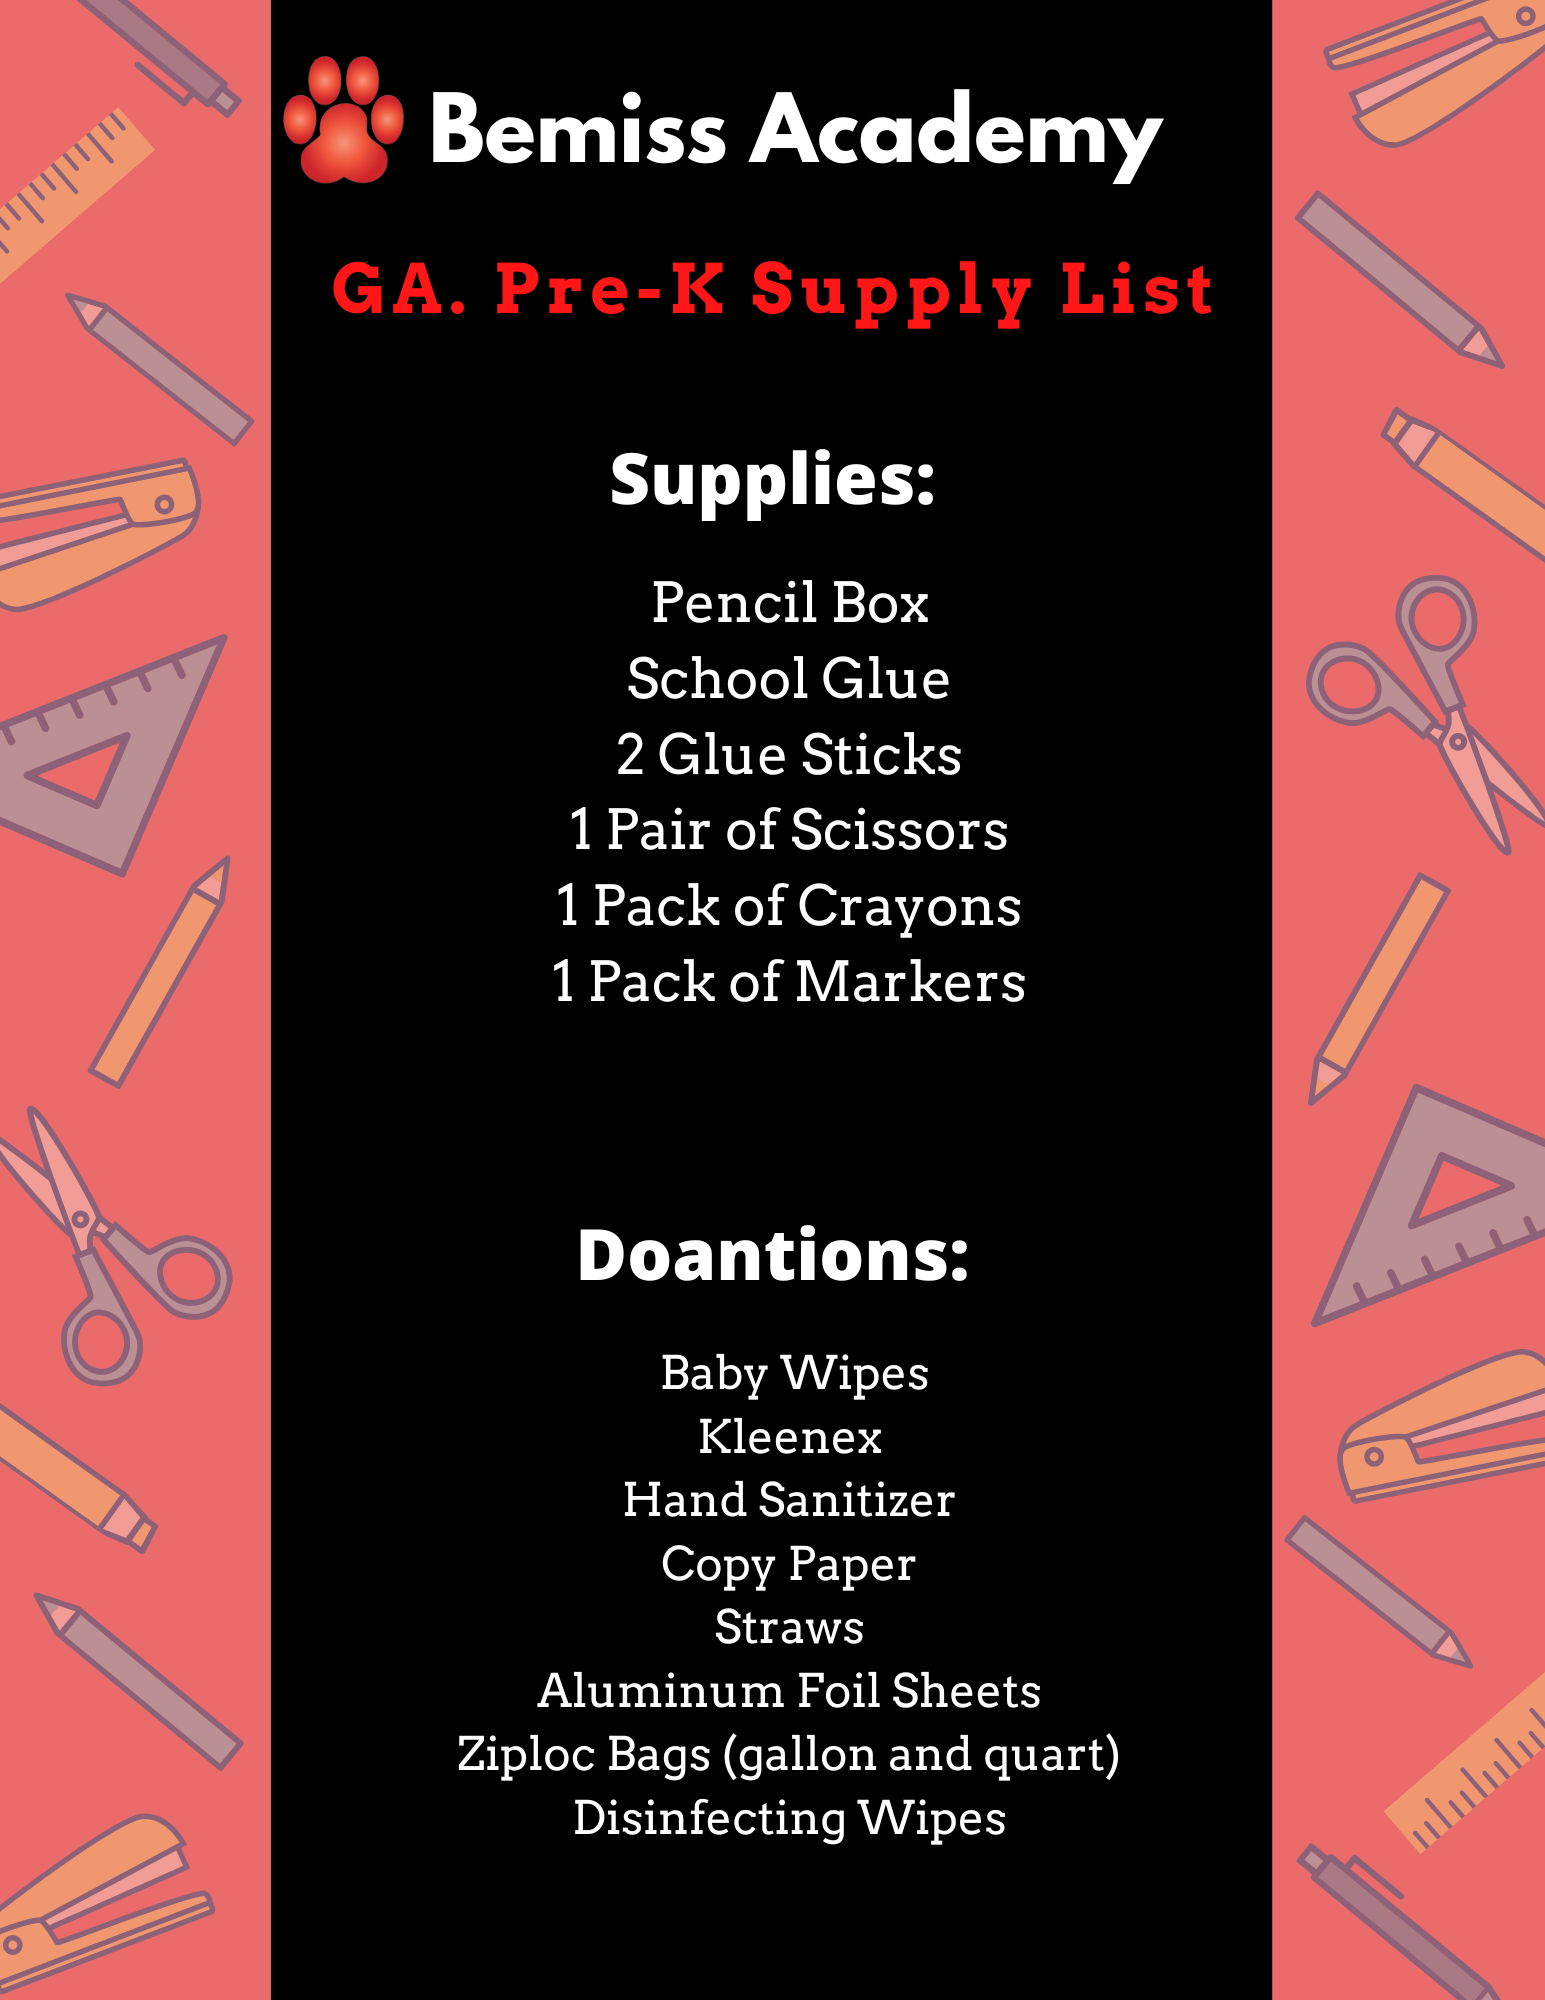 Ga Pre-K Supply List.png